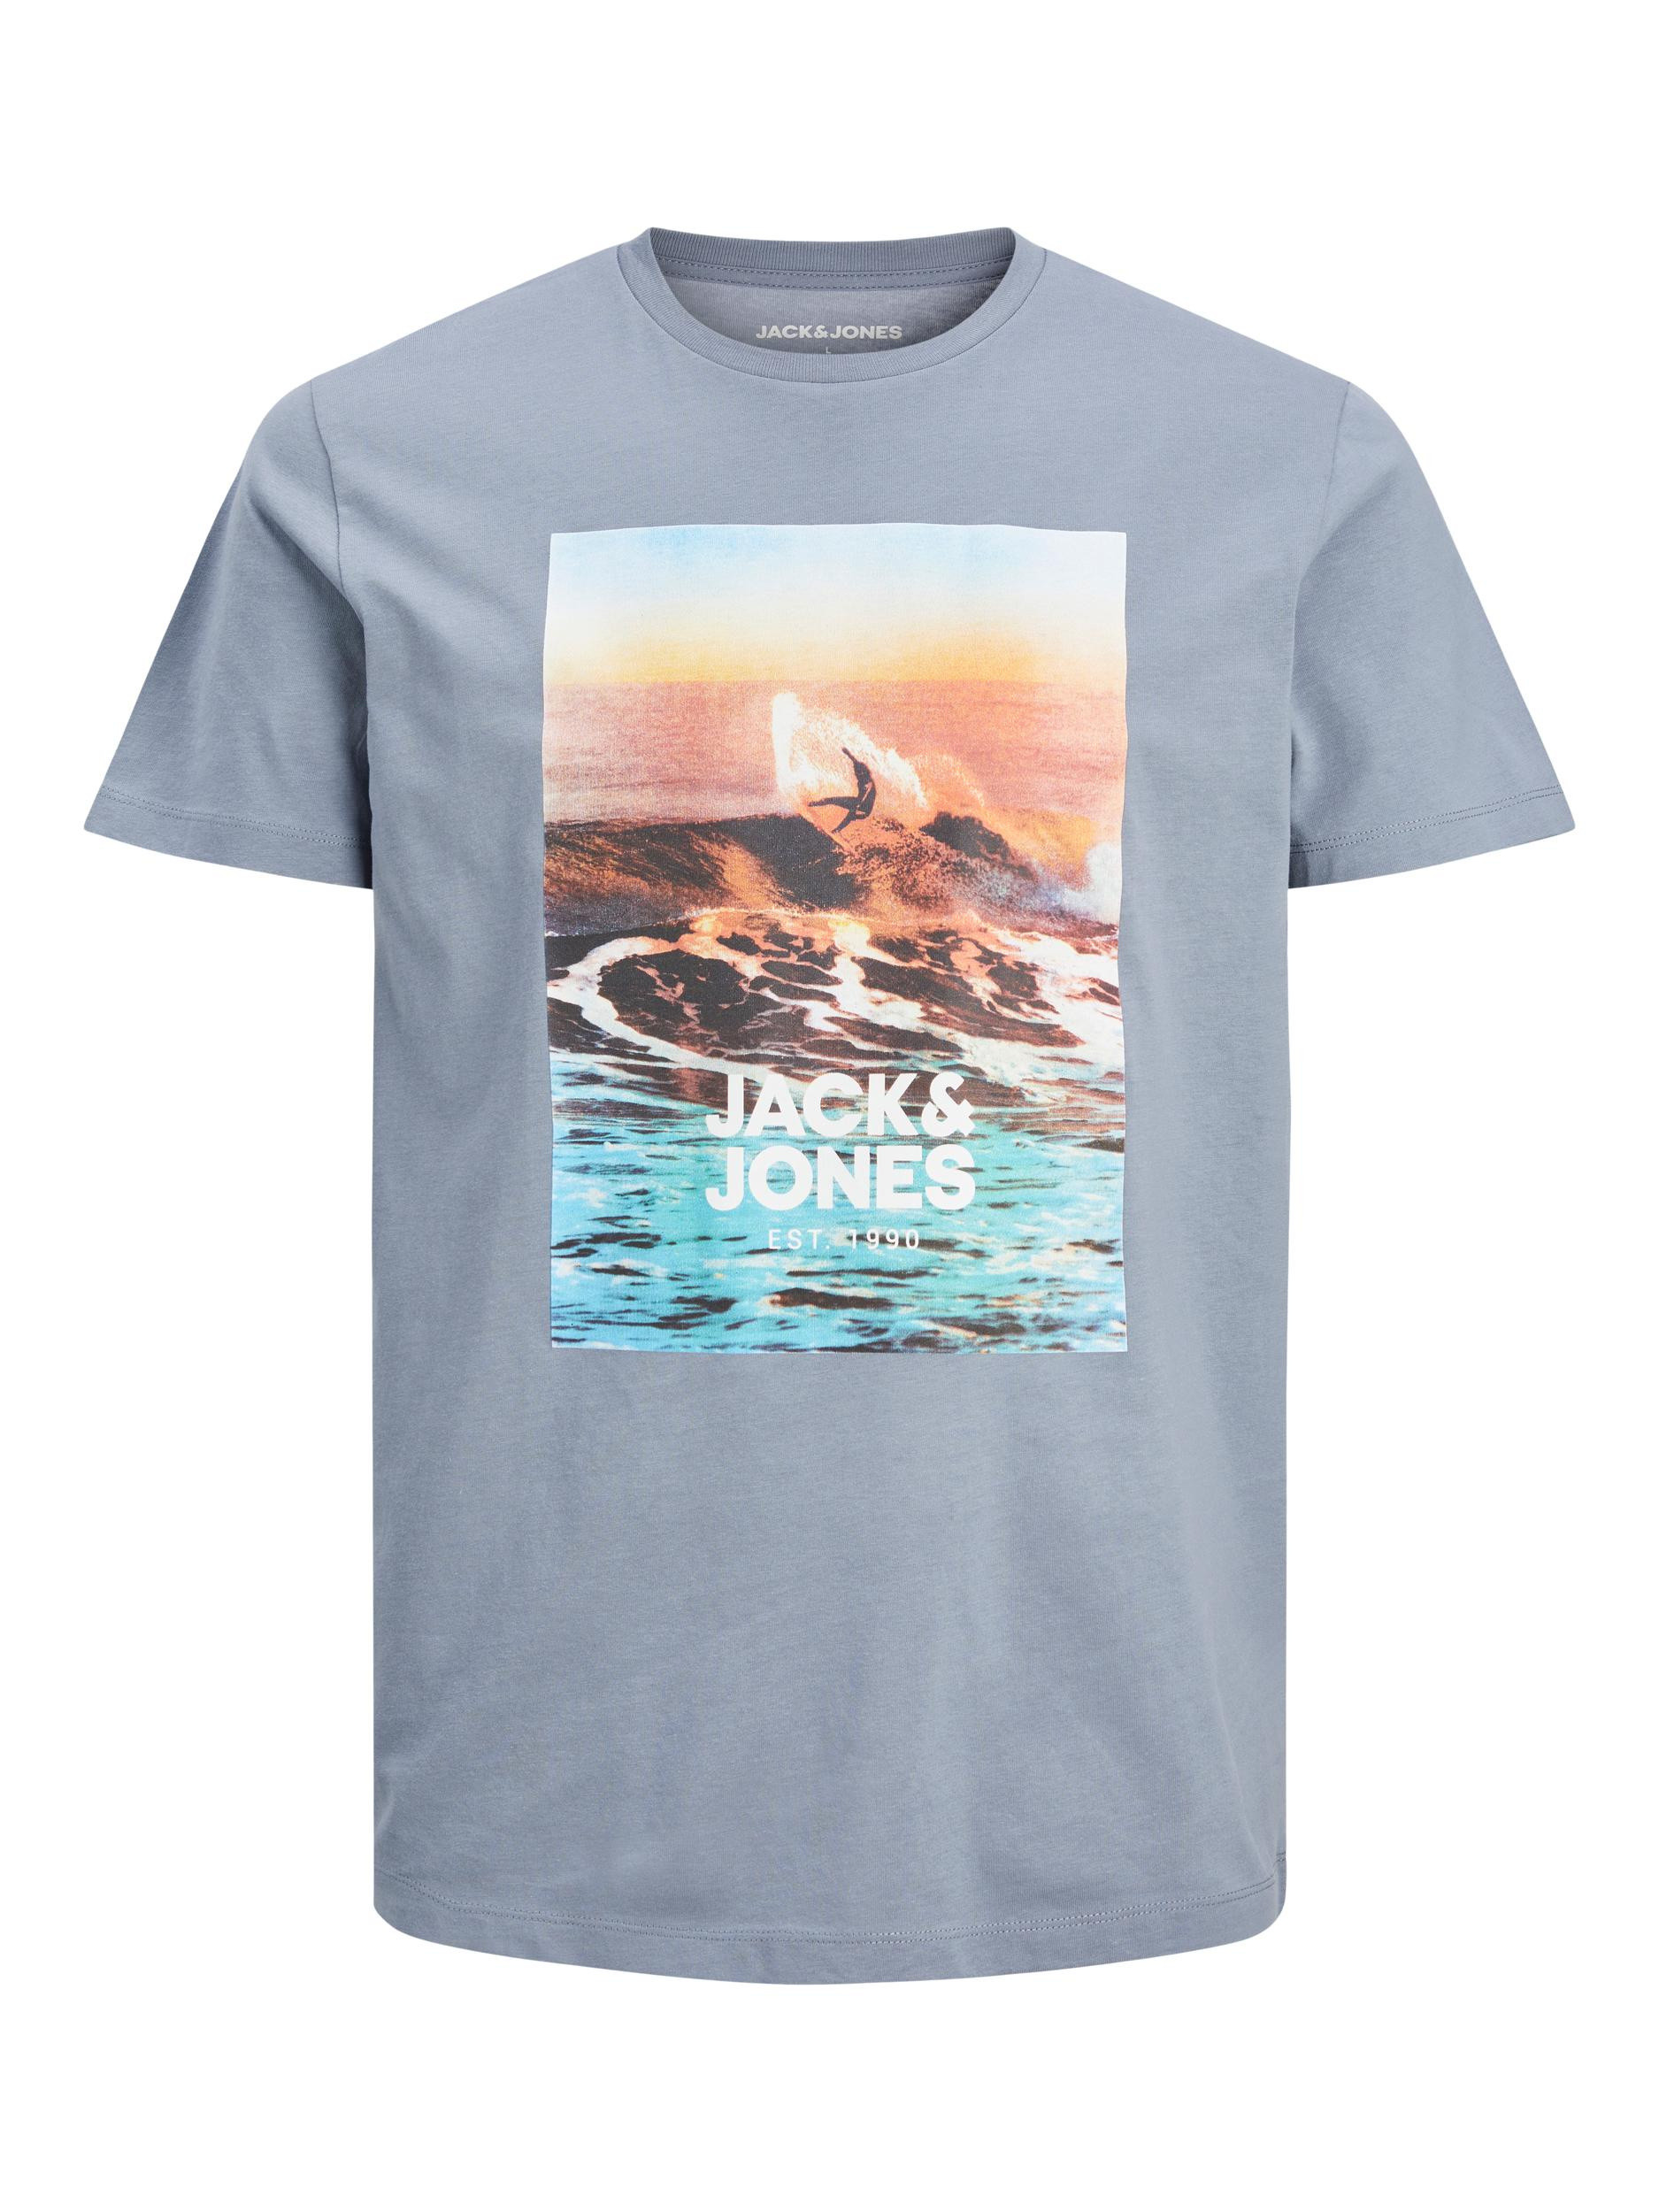 Jack & Jones - Printed cotton T-shirt, Grey, large image number 0